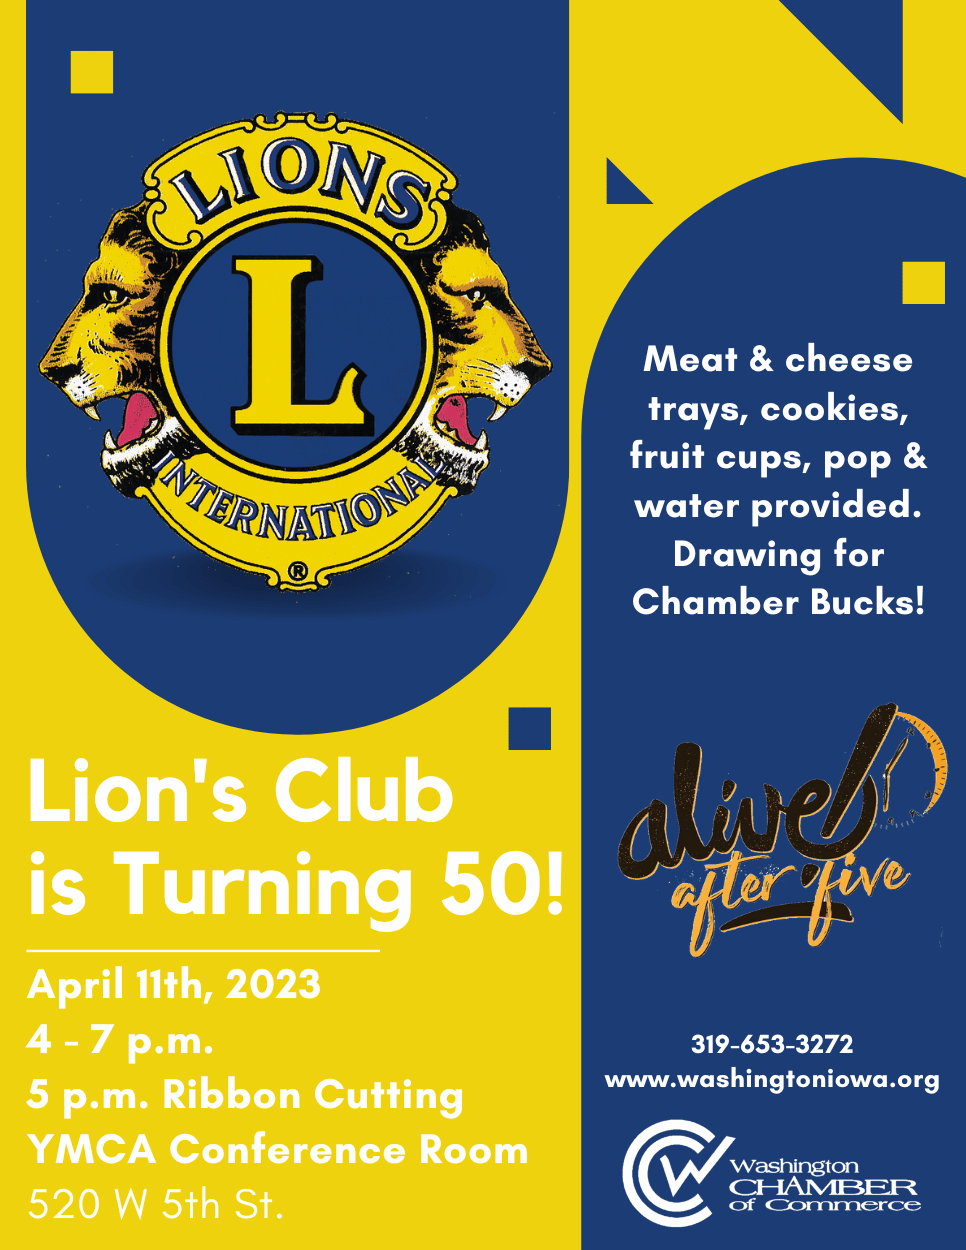 Lion's Club is Turning 50! - City of Washington, Iowa